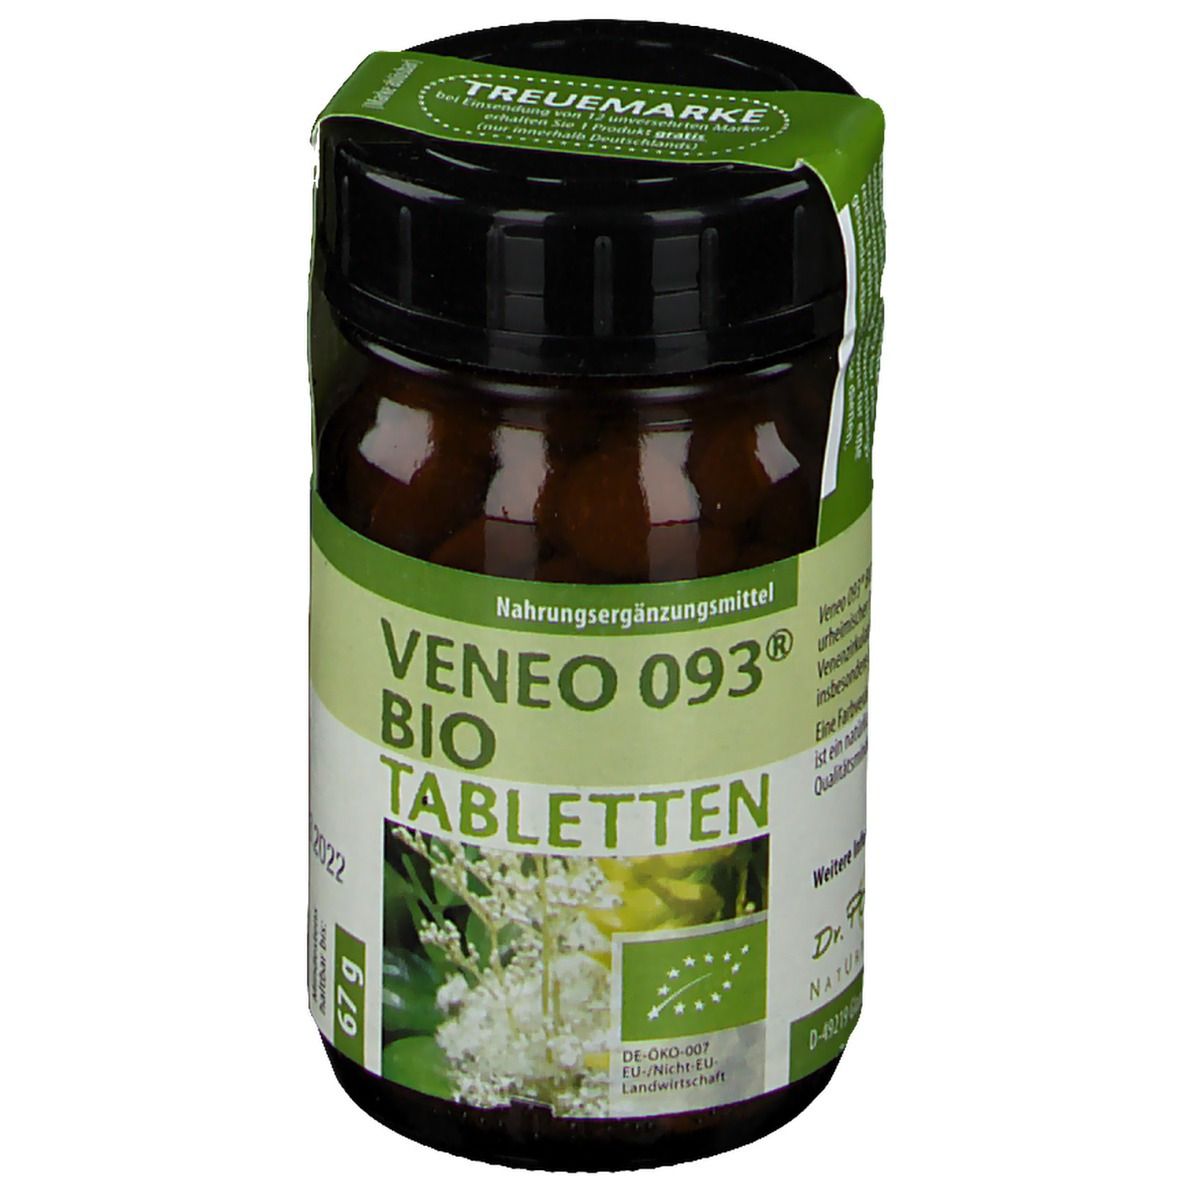 Veneo093® BIO Tabletten